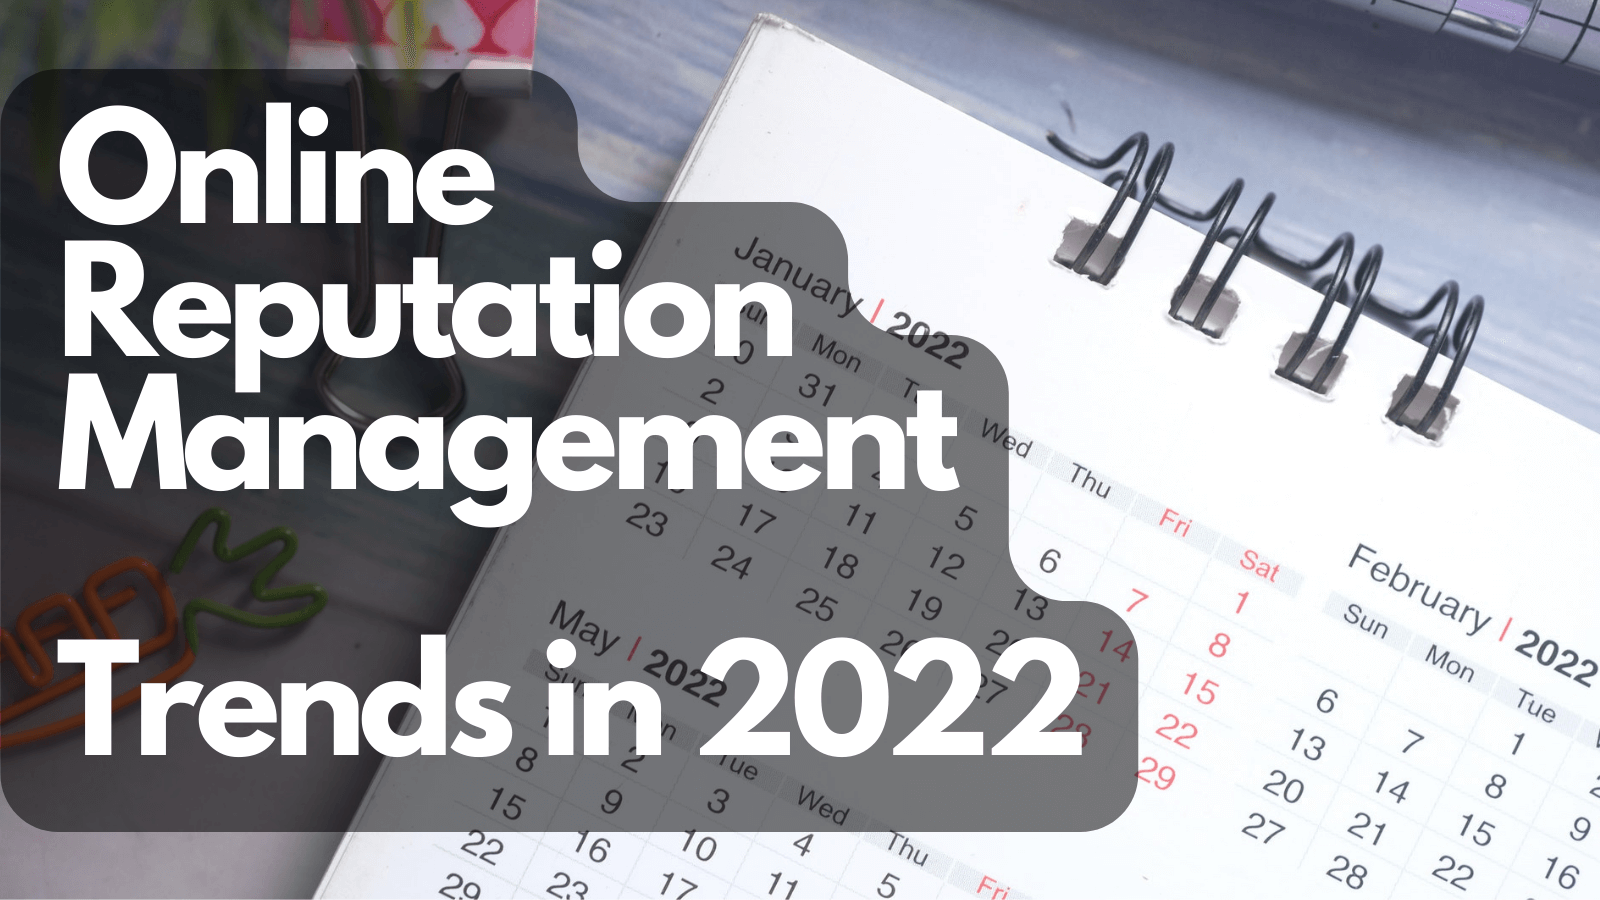 Online Reputation Management Trends in 2022